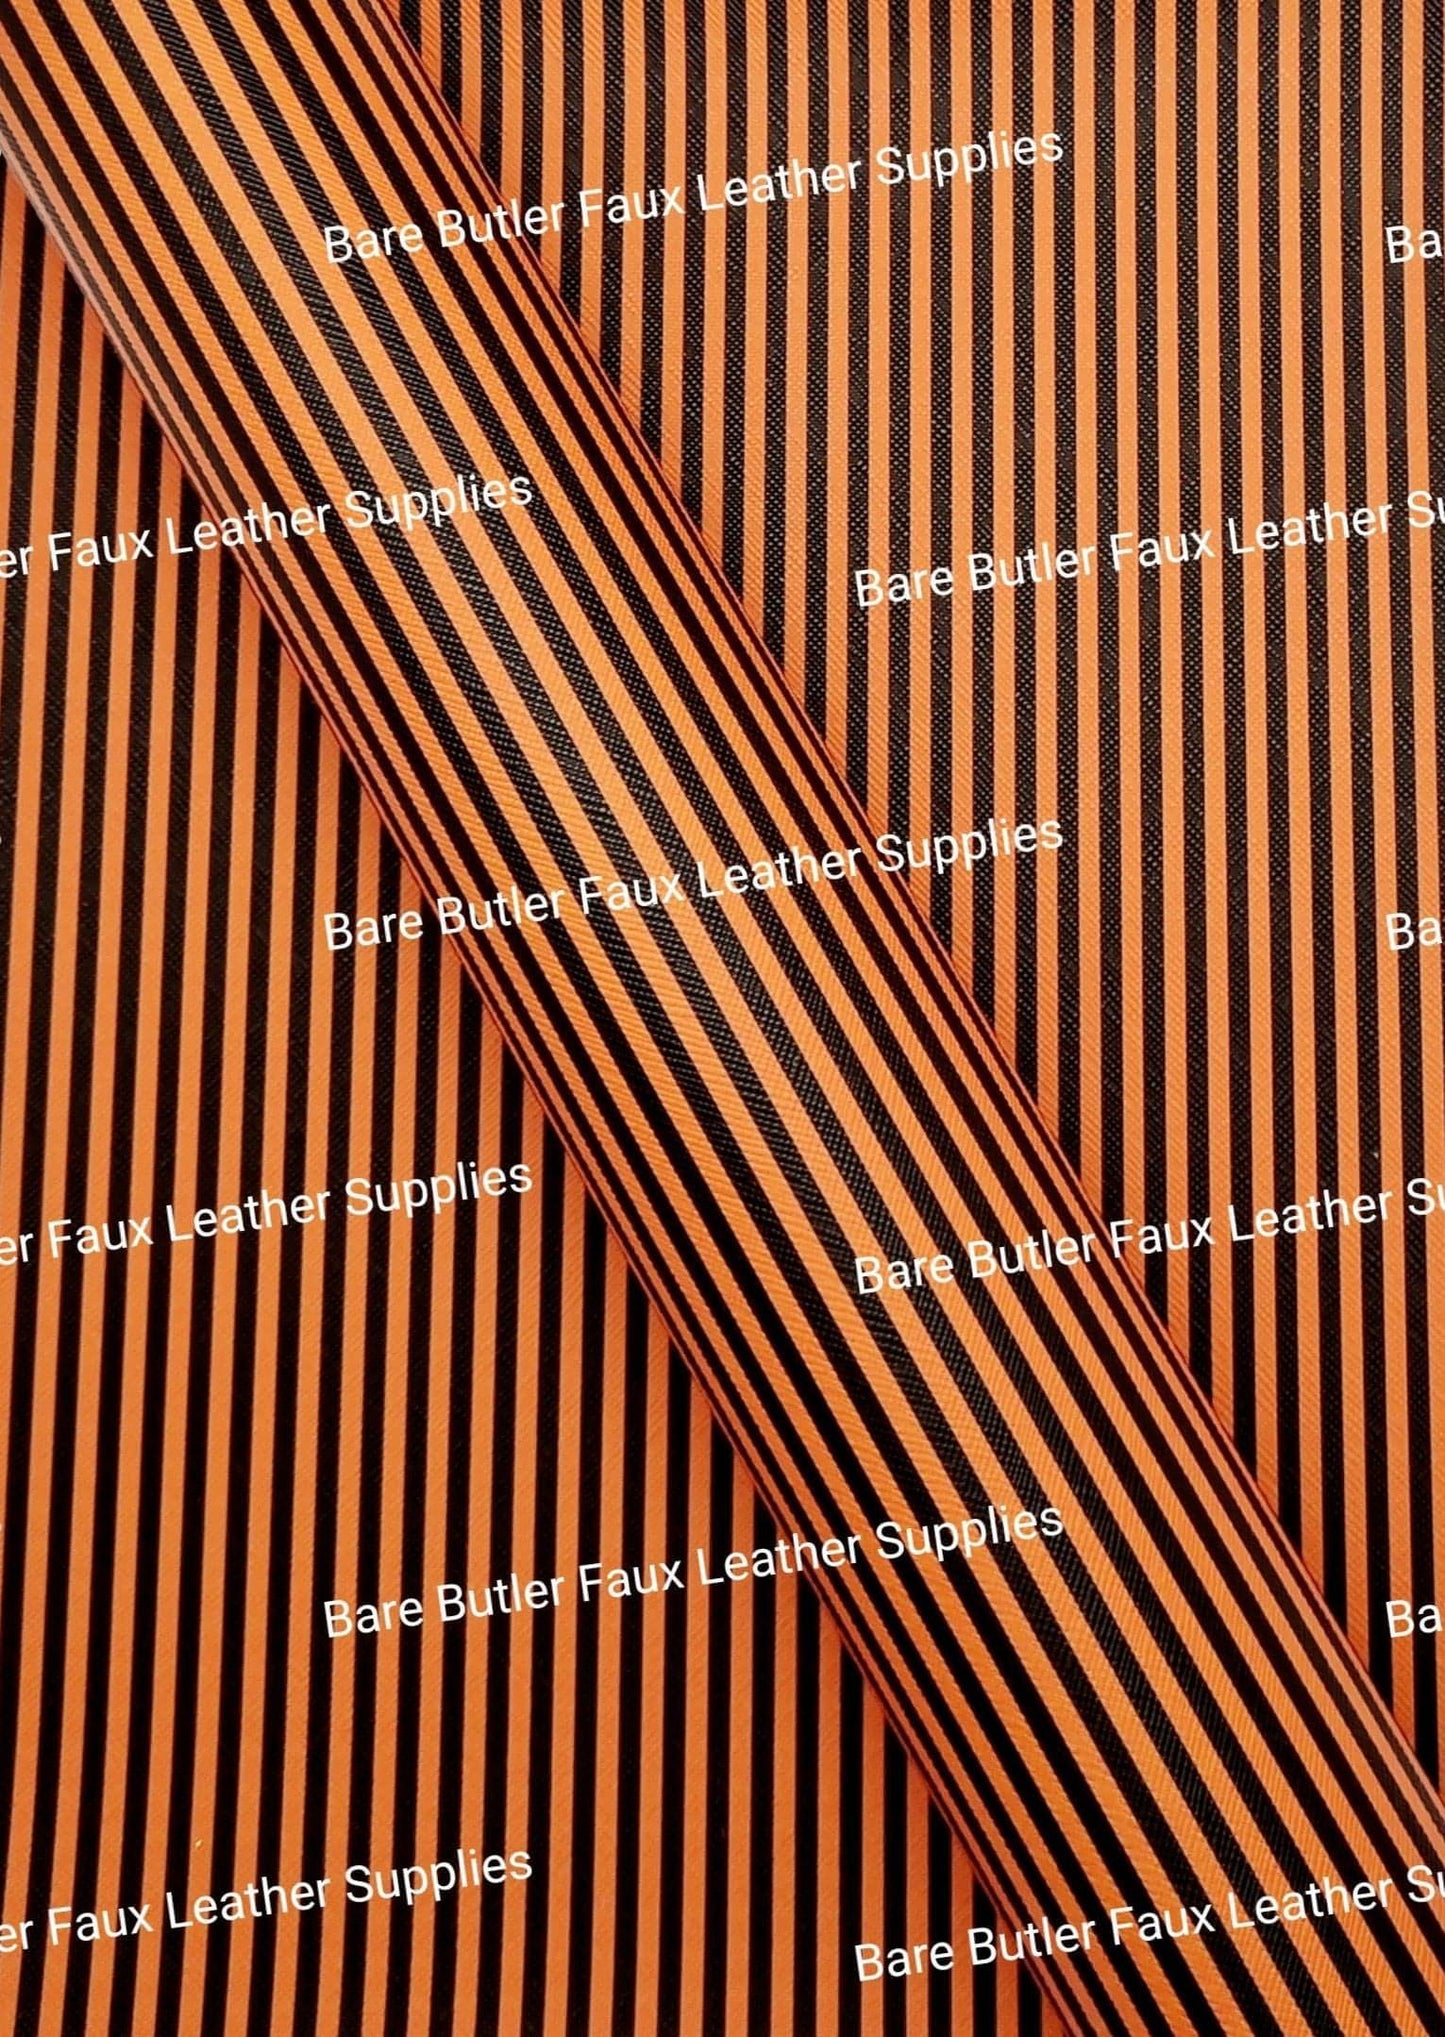 Black & Orange Stripes Faux Leather - Bare Butler Faux Leather Supplies 